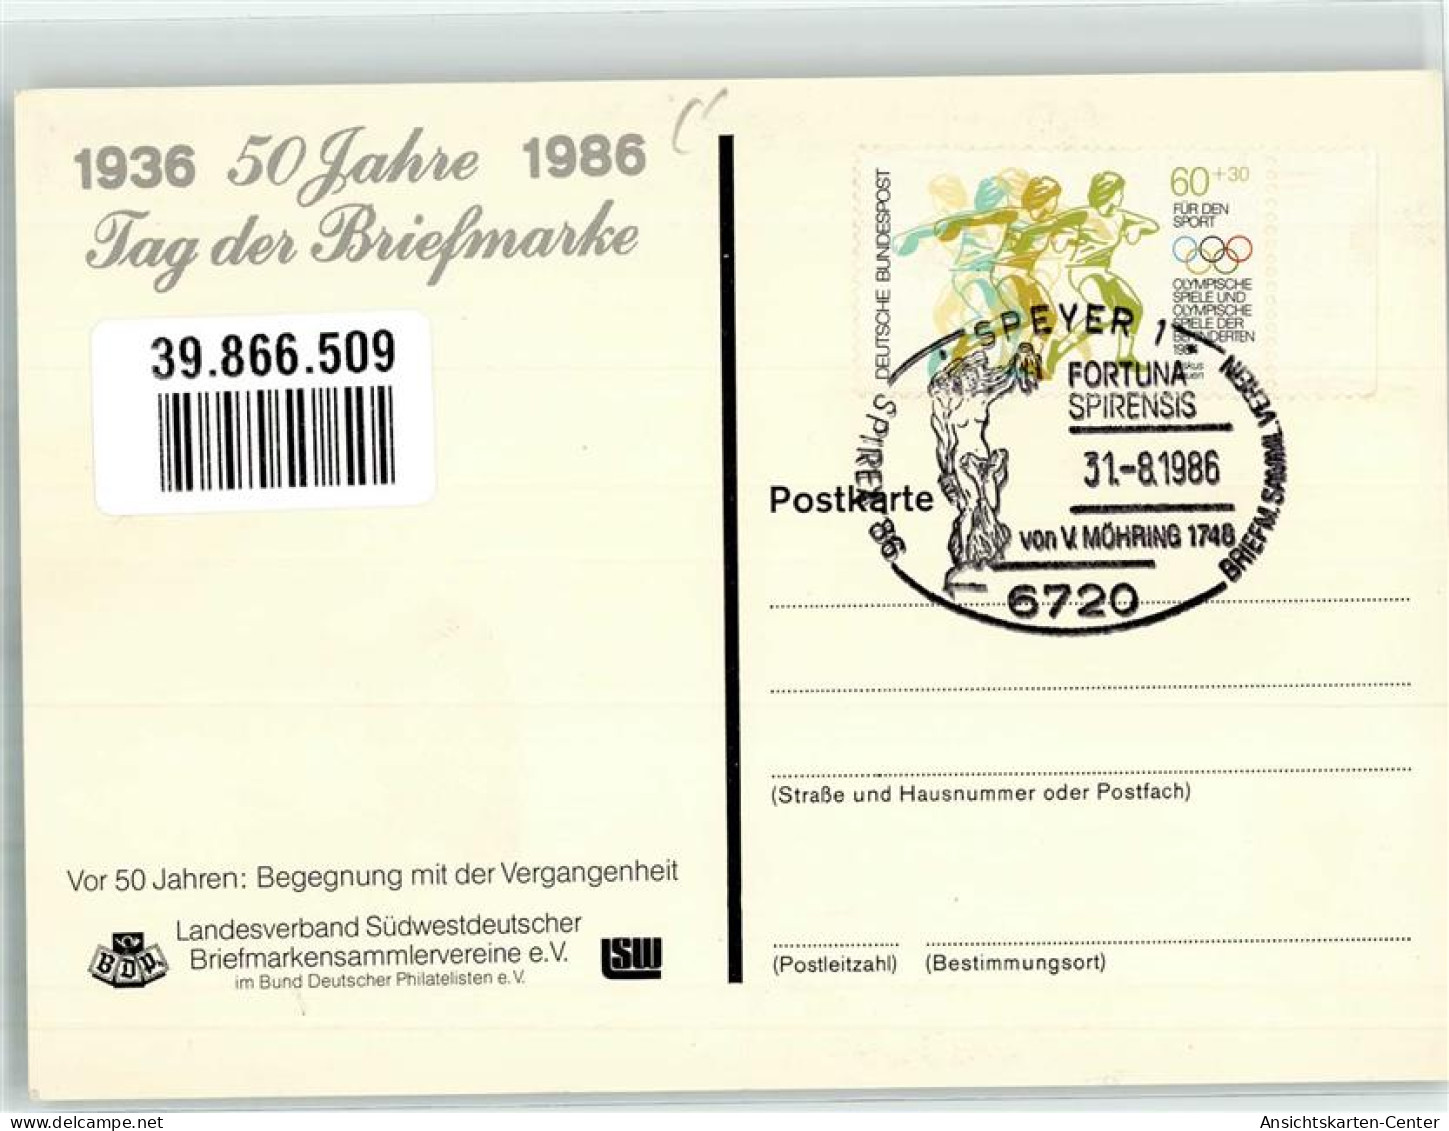 39866509 - Postkutsche Flugzeug Frau Sonderstempel 1986 - Timbres (représentations)